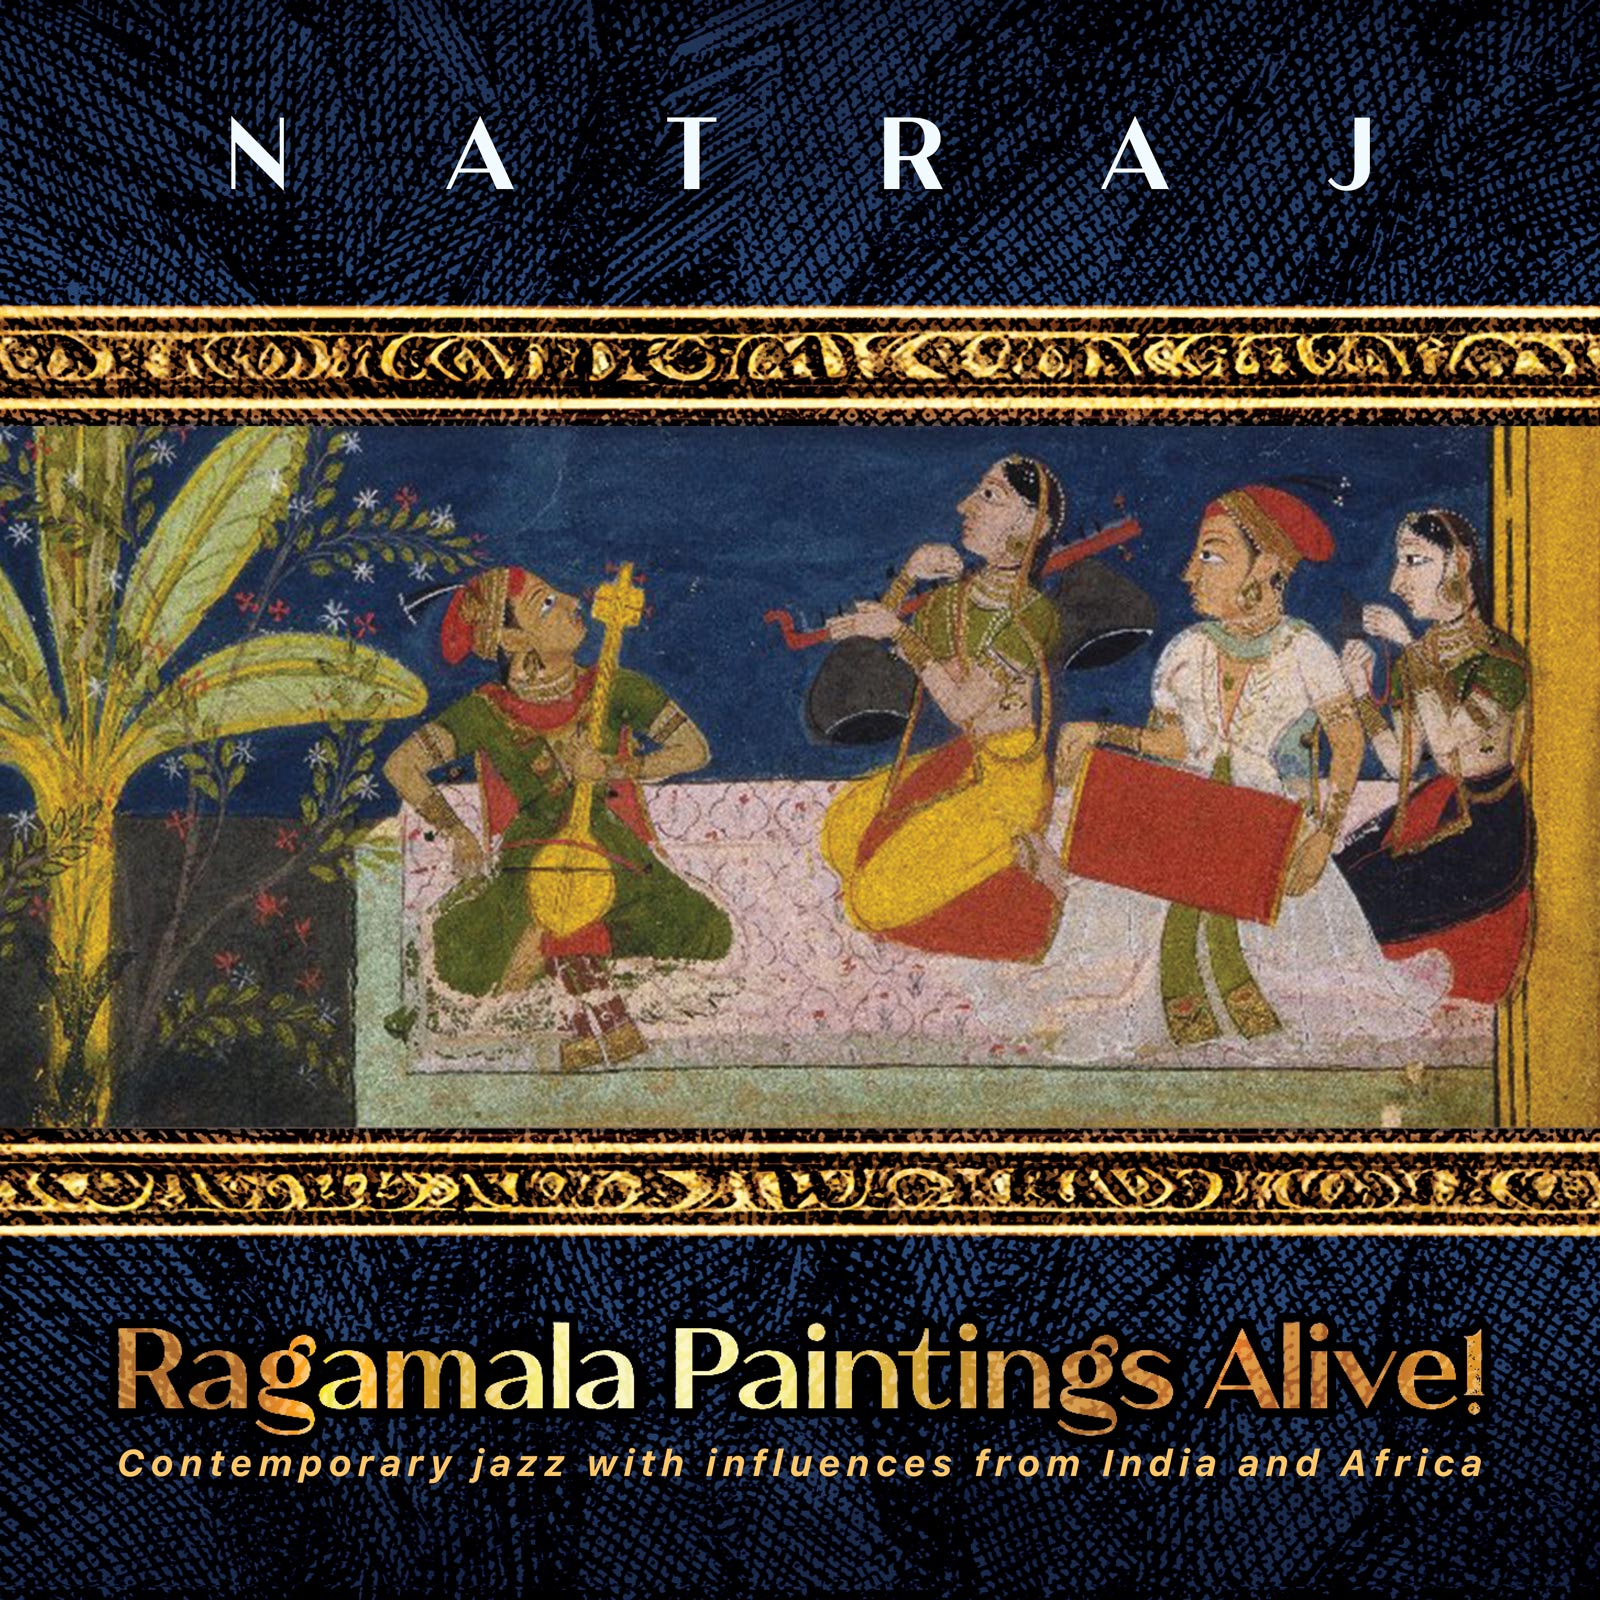 Ragamala Paintings Alive! - album cover